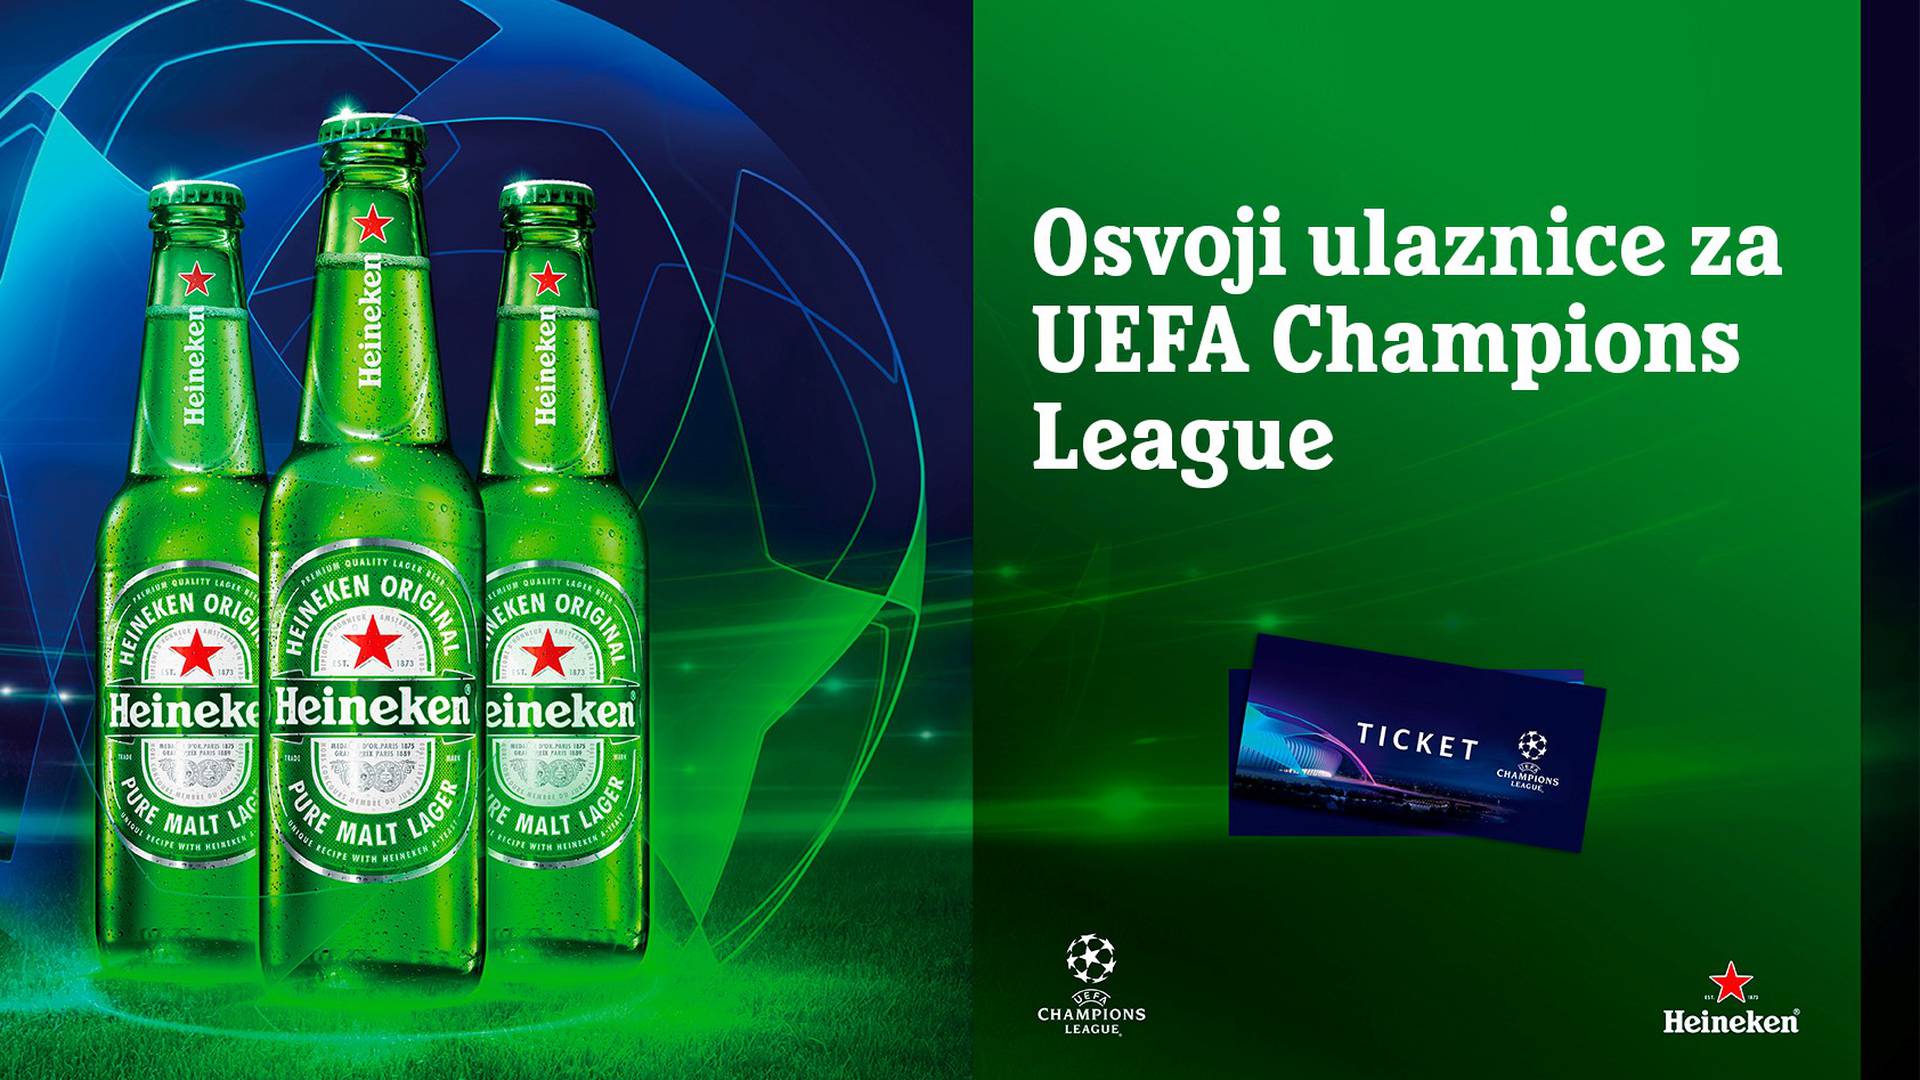 Heineken® te vodi na utakmicu Dinamo - Šahtar na Maksimiru